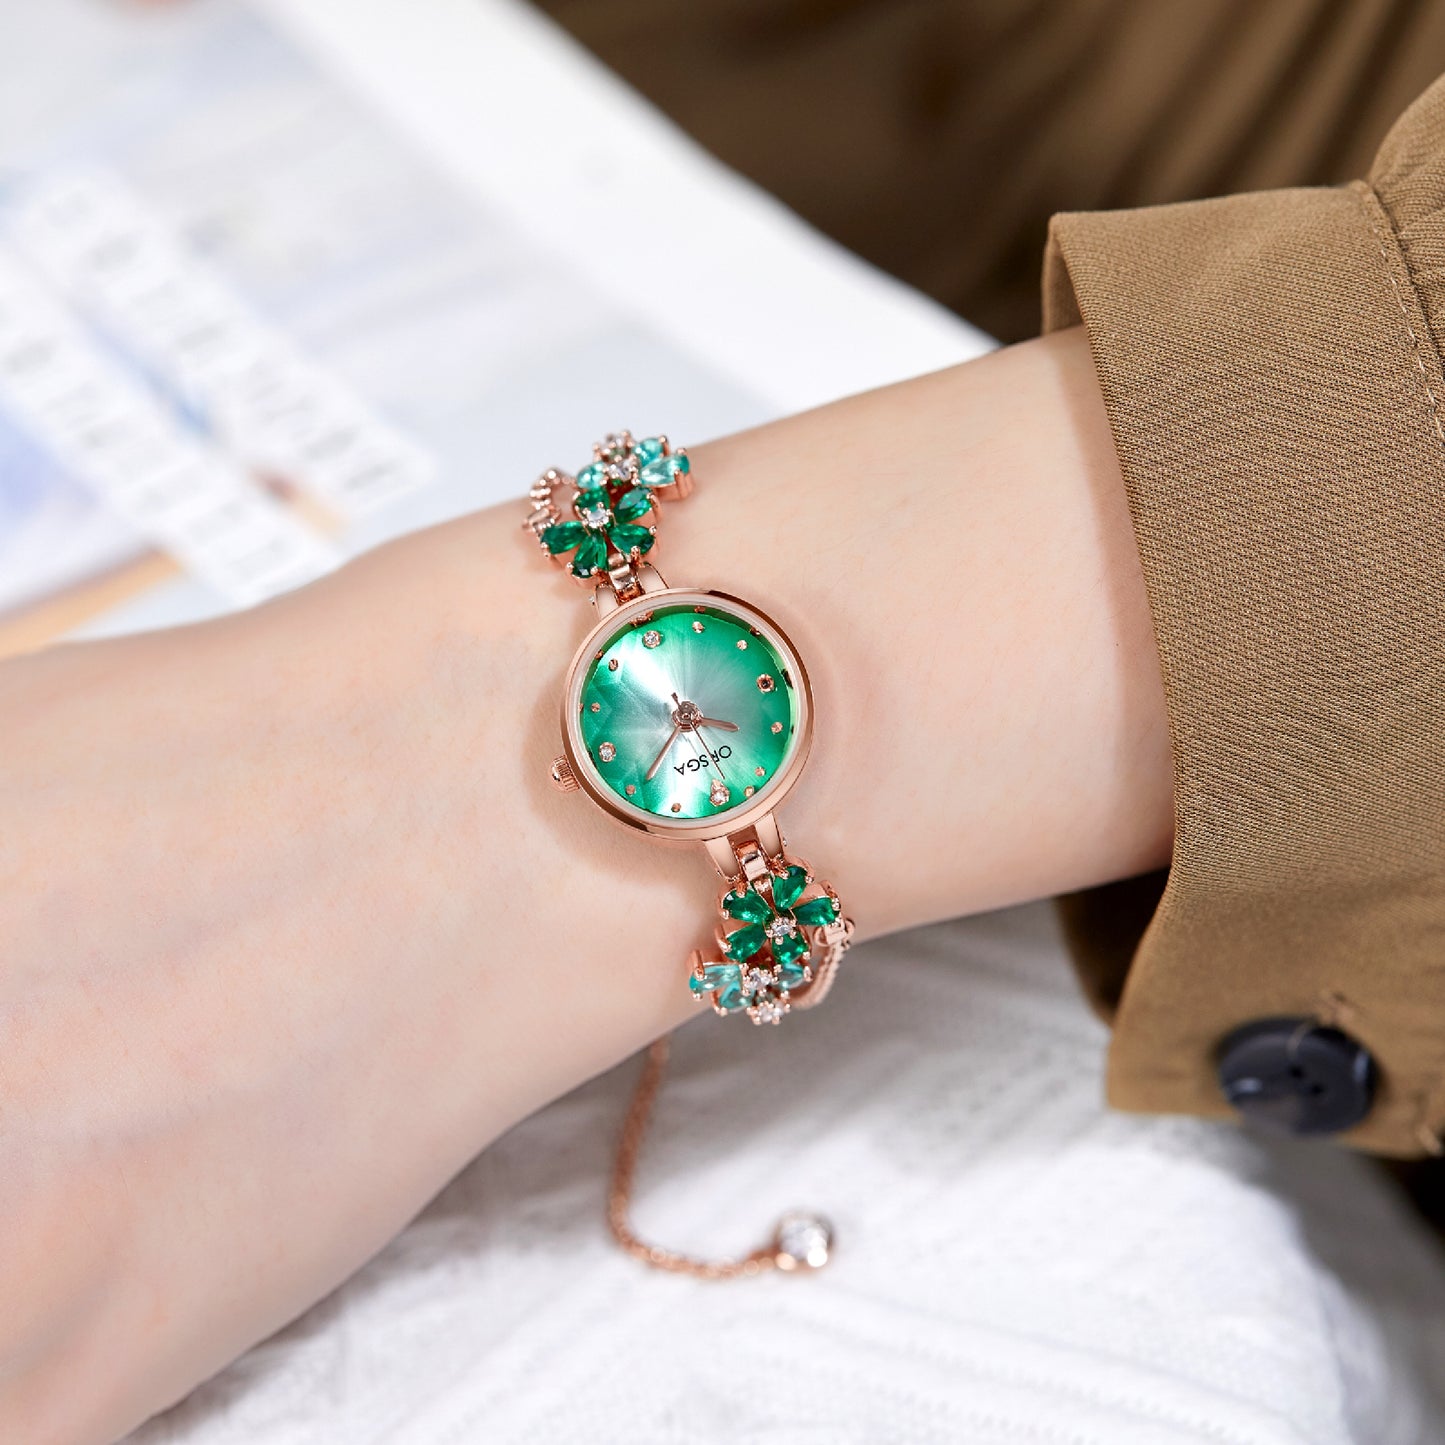 ORSGA FLEUR Green Dial Flower Chain Bracelet Watch